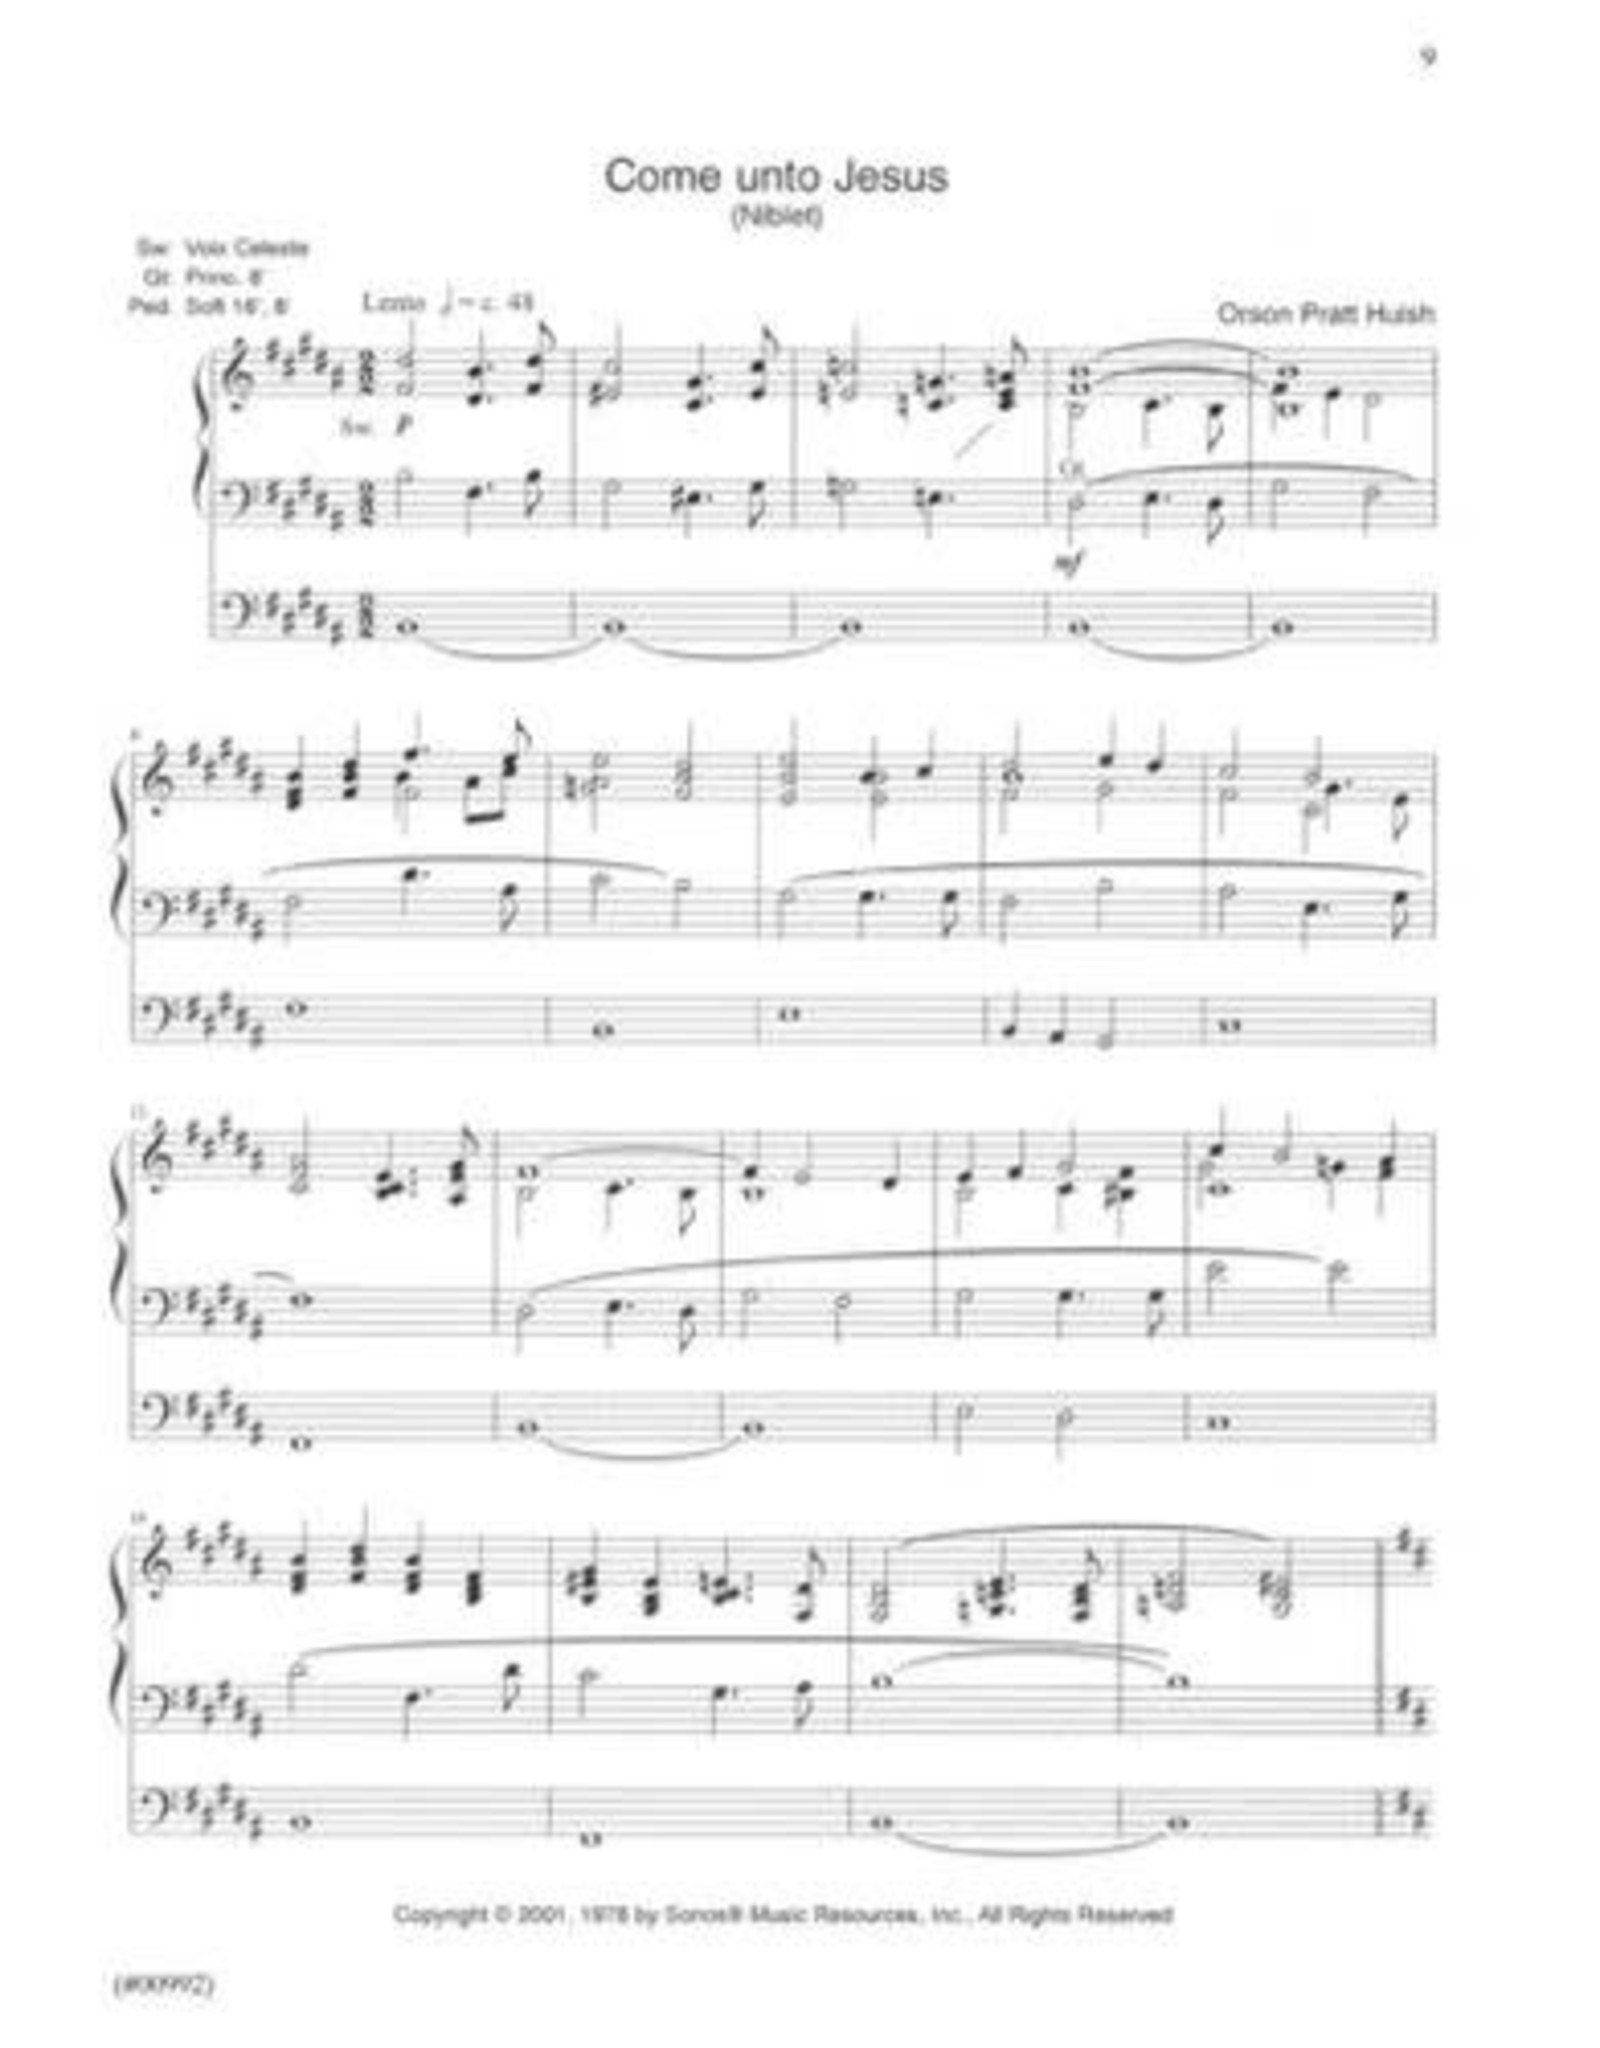 Jackman Music From the Tabernacle for Organ, Volume 1 - Robert Cundick and John Longhurst